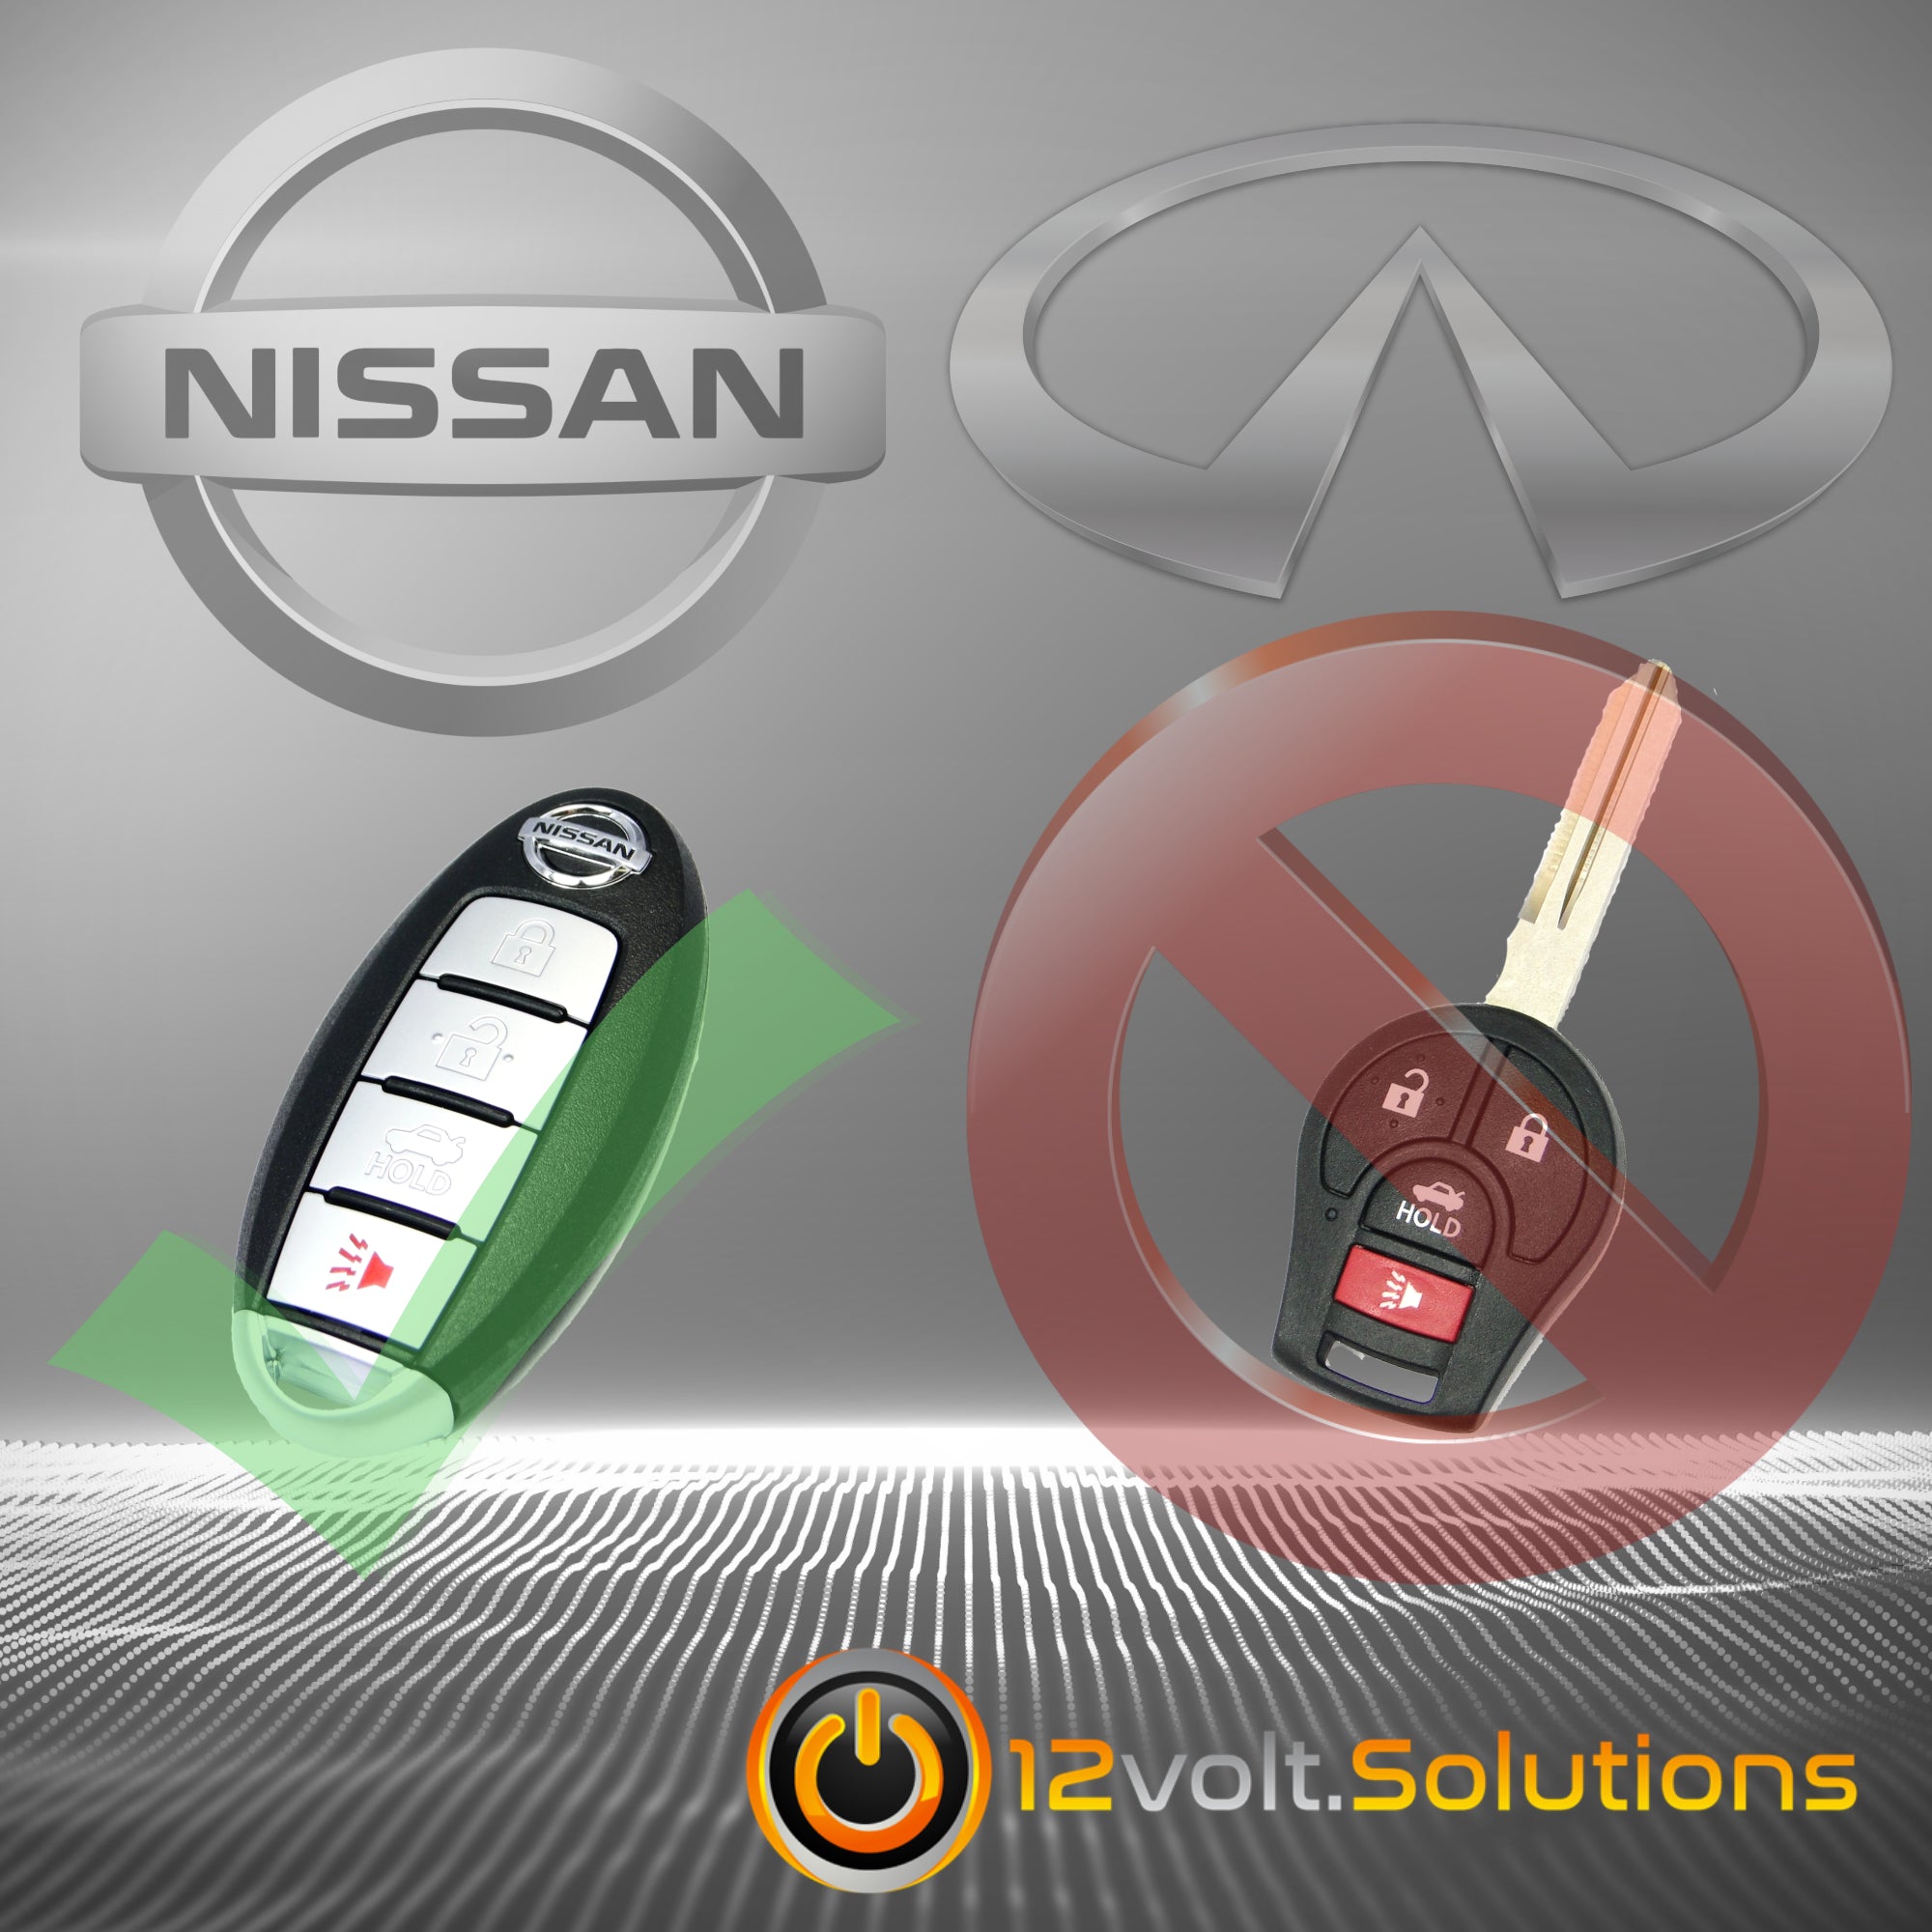 2007-2011 Nissan Versa Remote Start Plug and Play Kit (Intelligent Key)-12Volt.Solutions